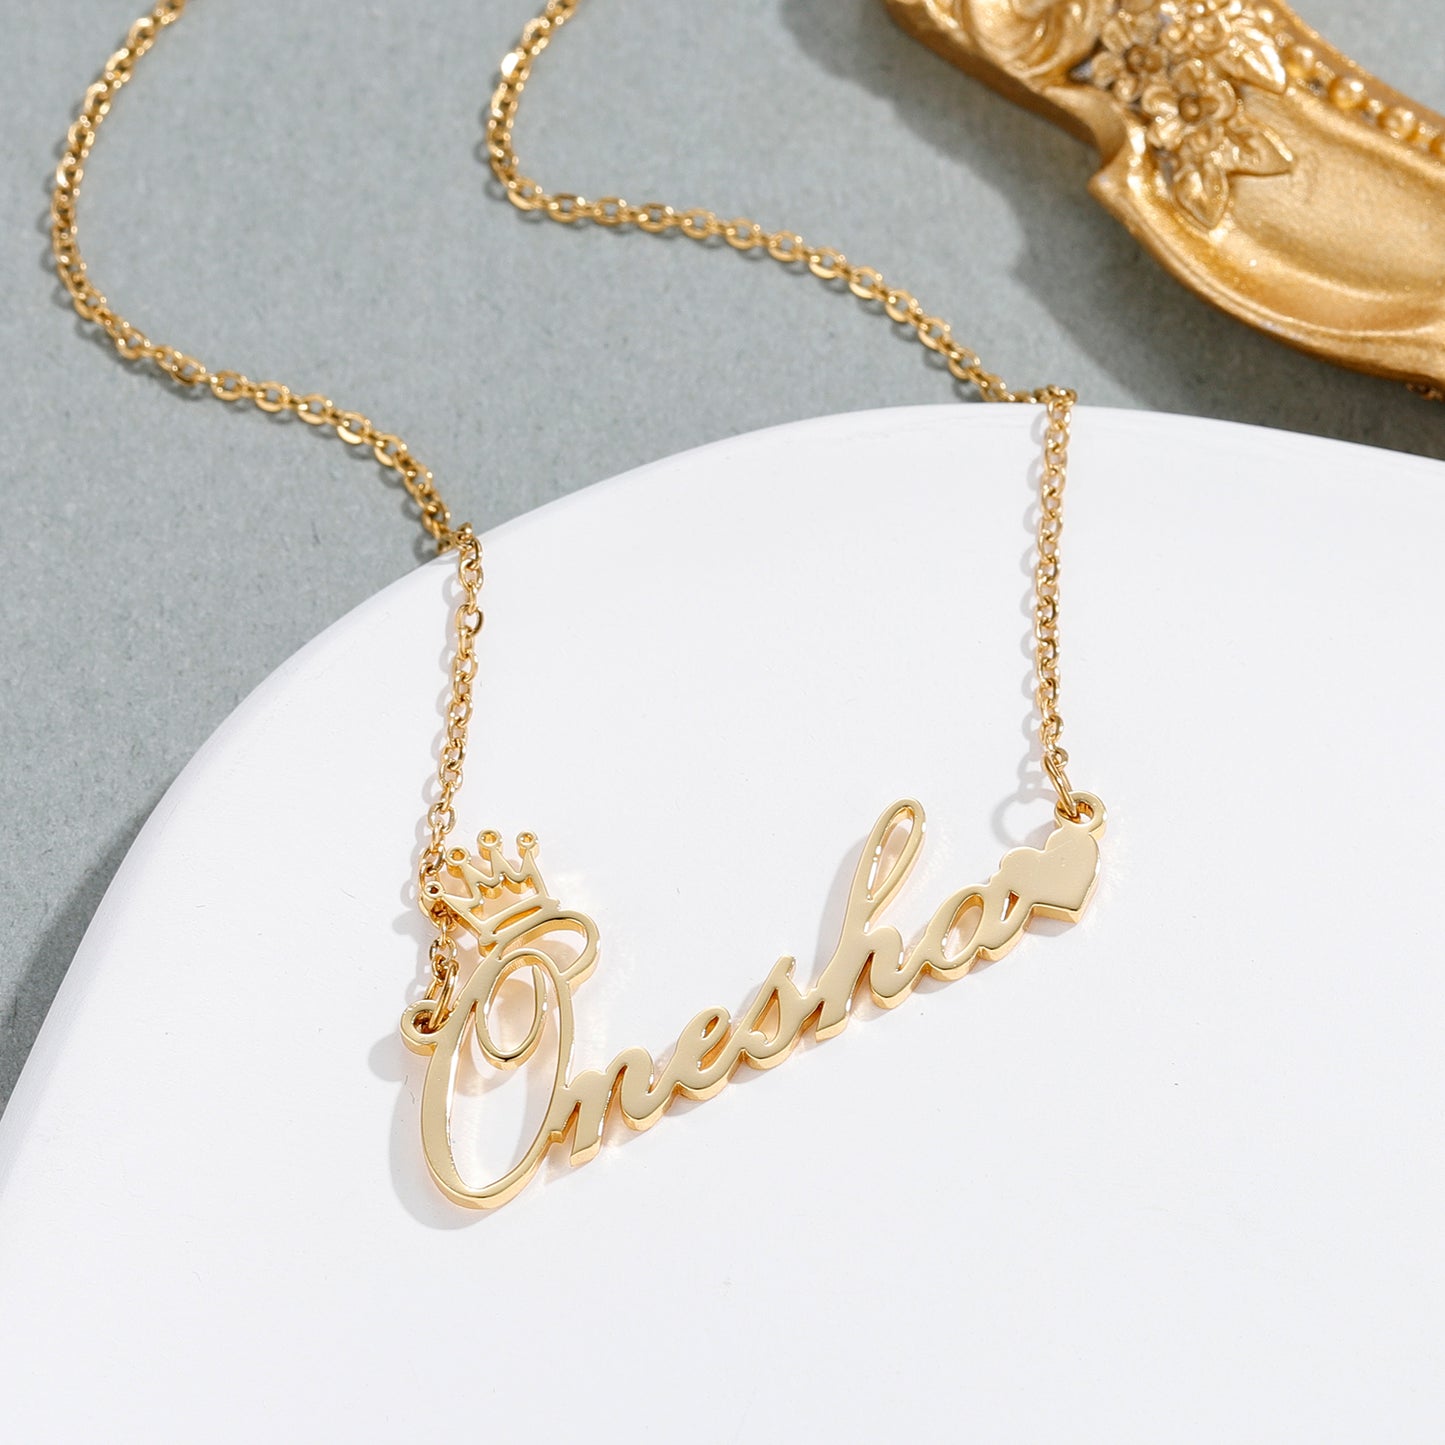 Personalised Bespoke Single Name Necklace - Crown Design Hearts Arabic English Jewellery Best Friend Graduation Gift - PRINCESS